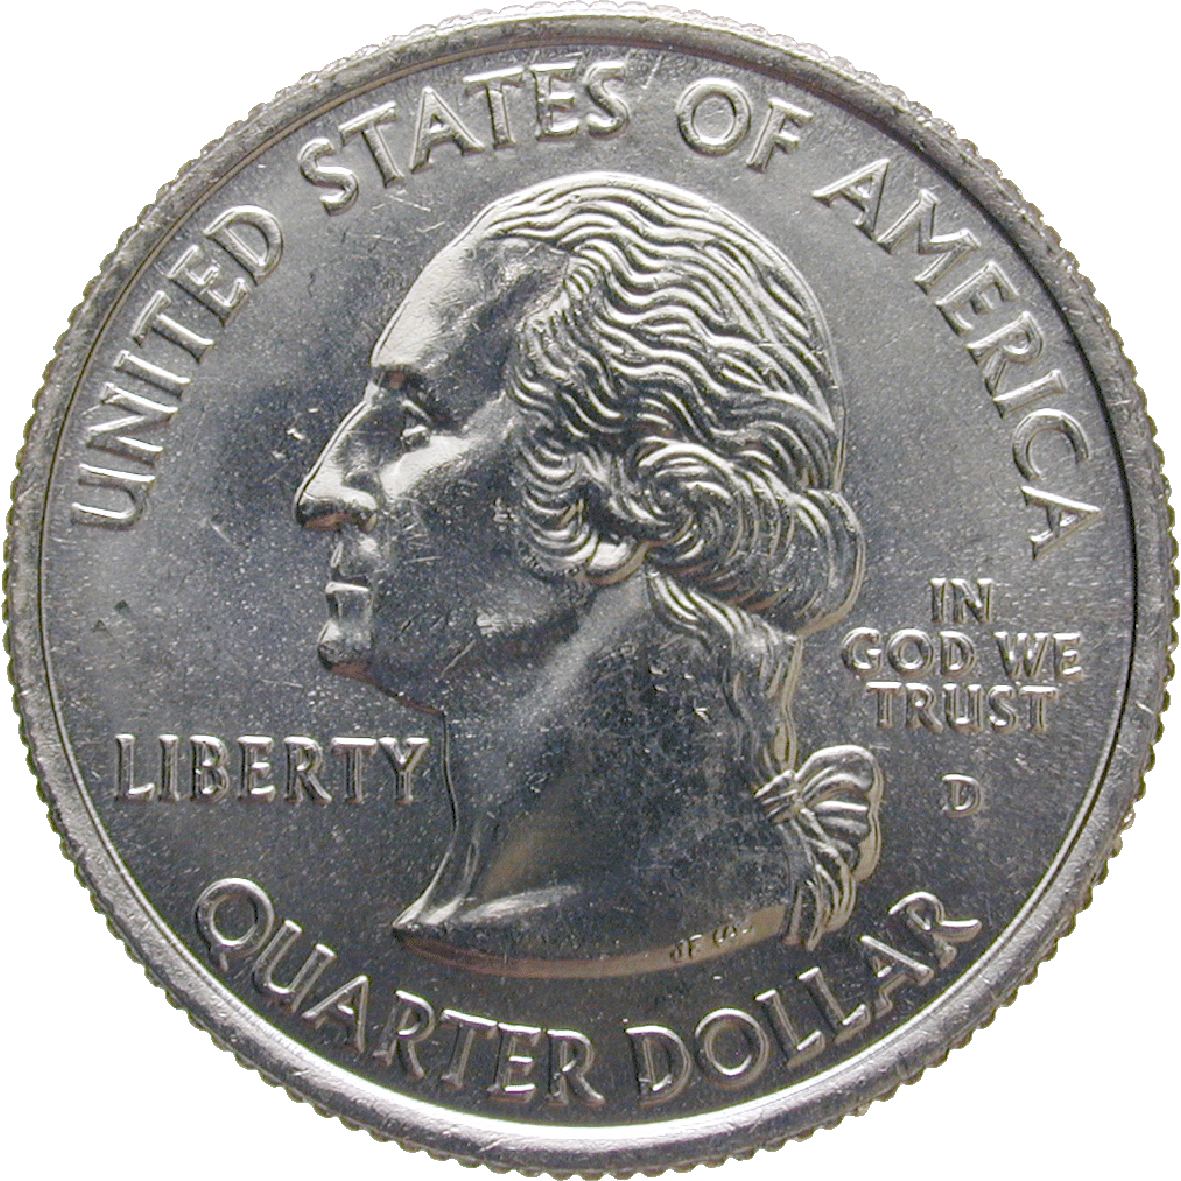 United States of America, Quarter Dollar 2008 (obverse)